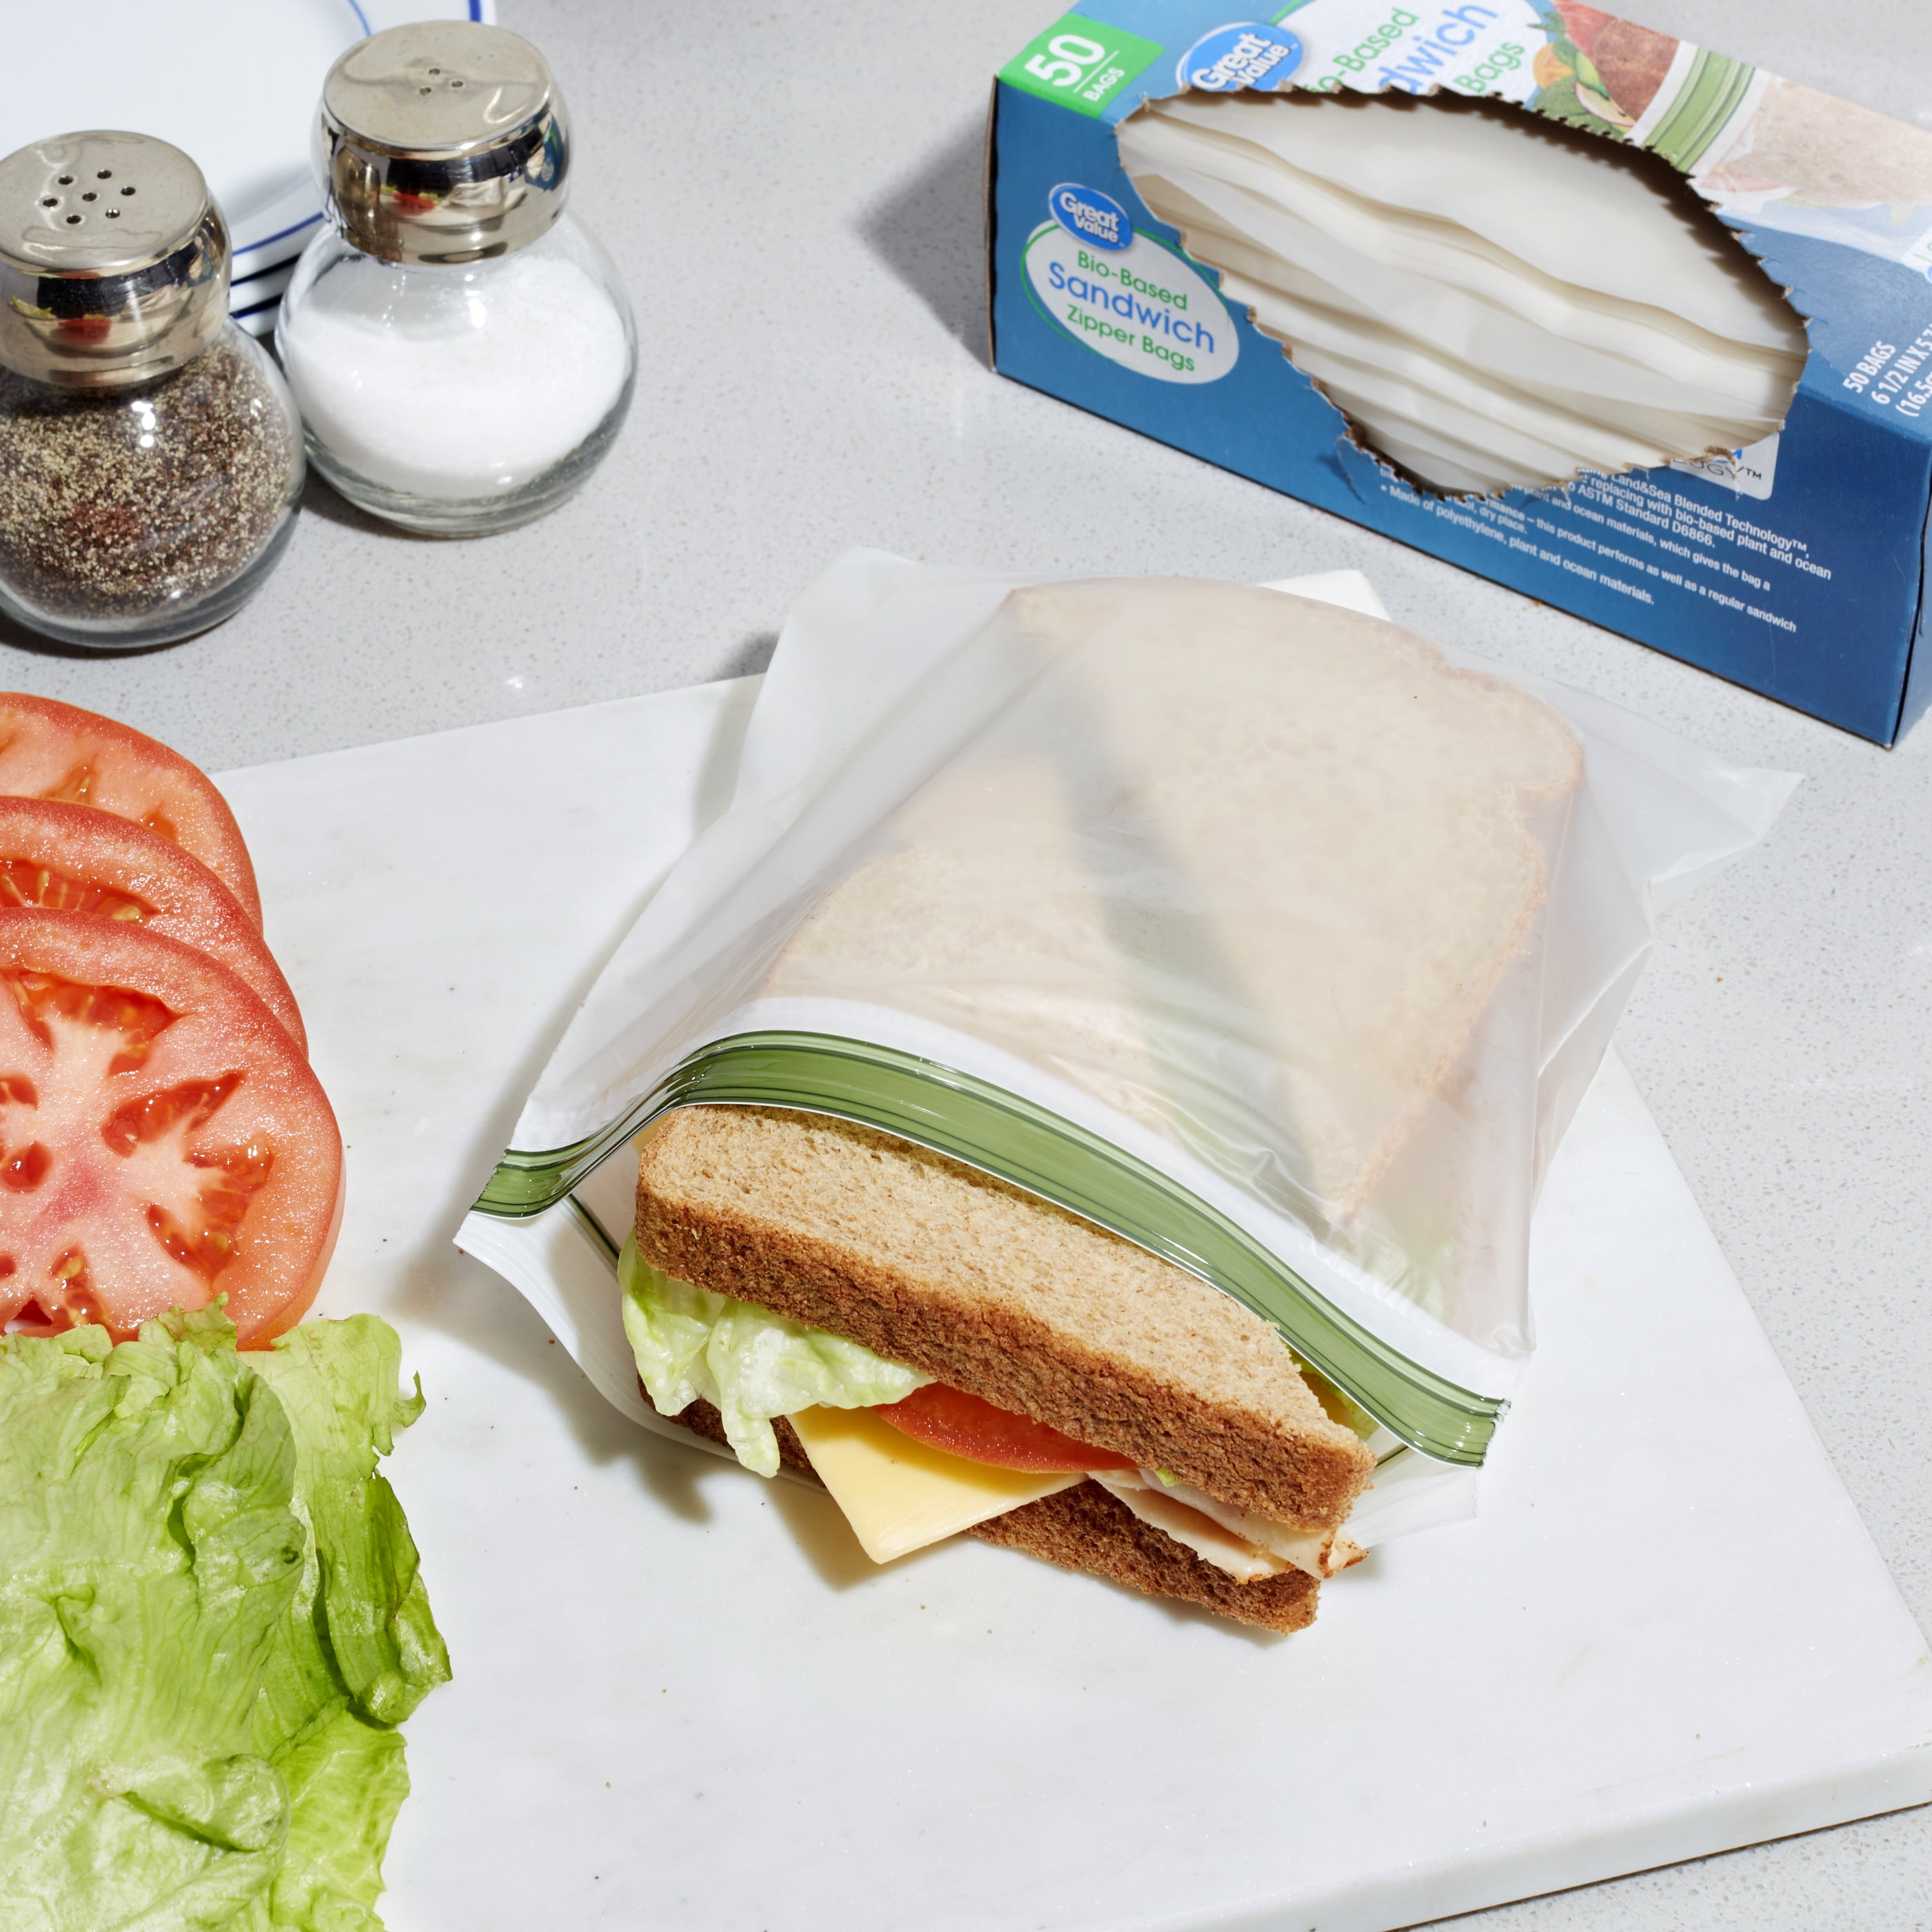 Recyclable XL Sandwich Bags Stripe 50 Count